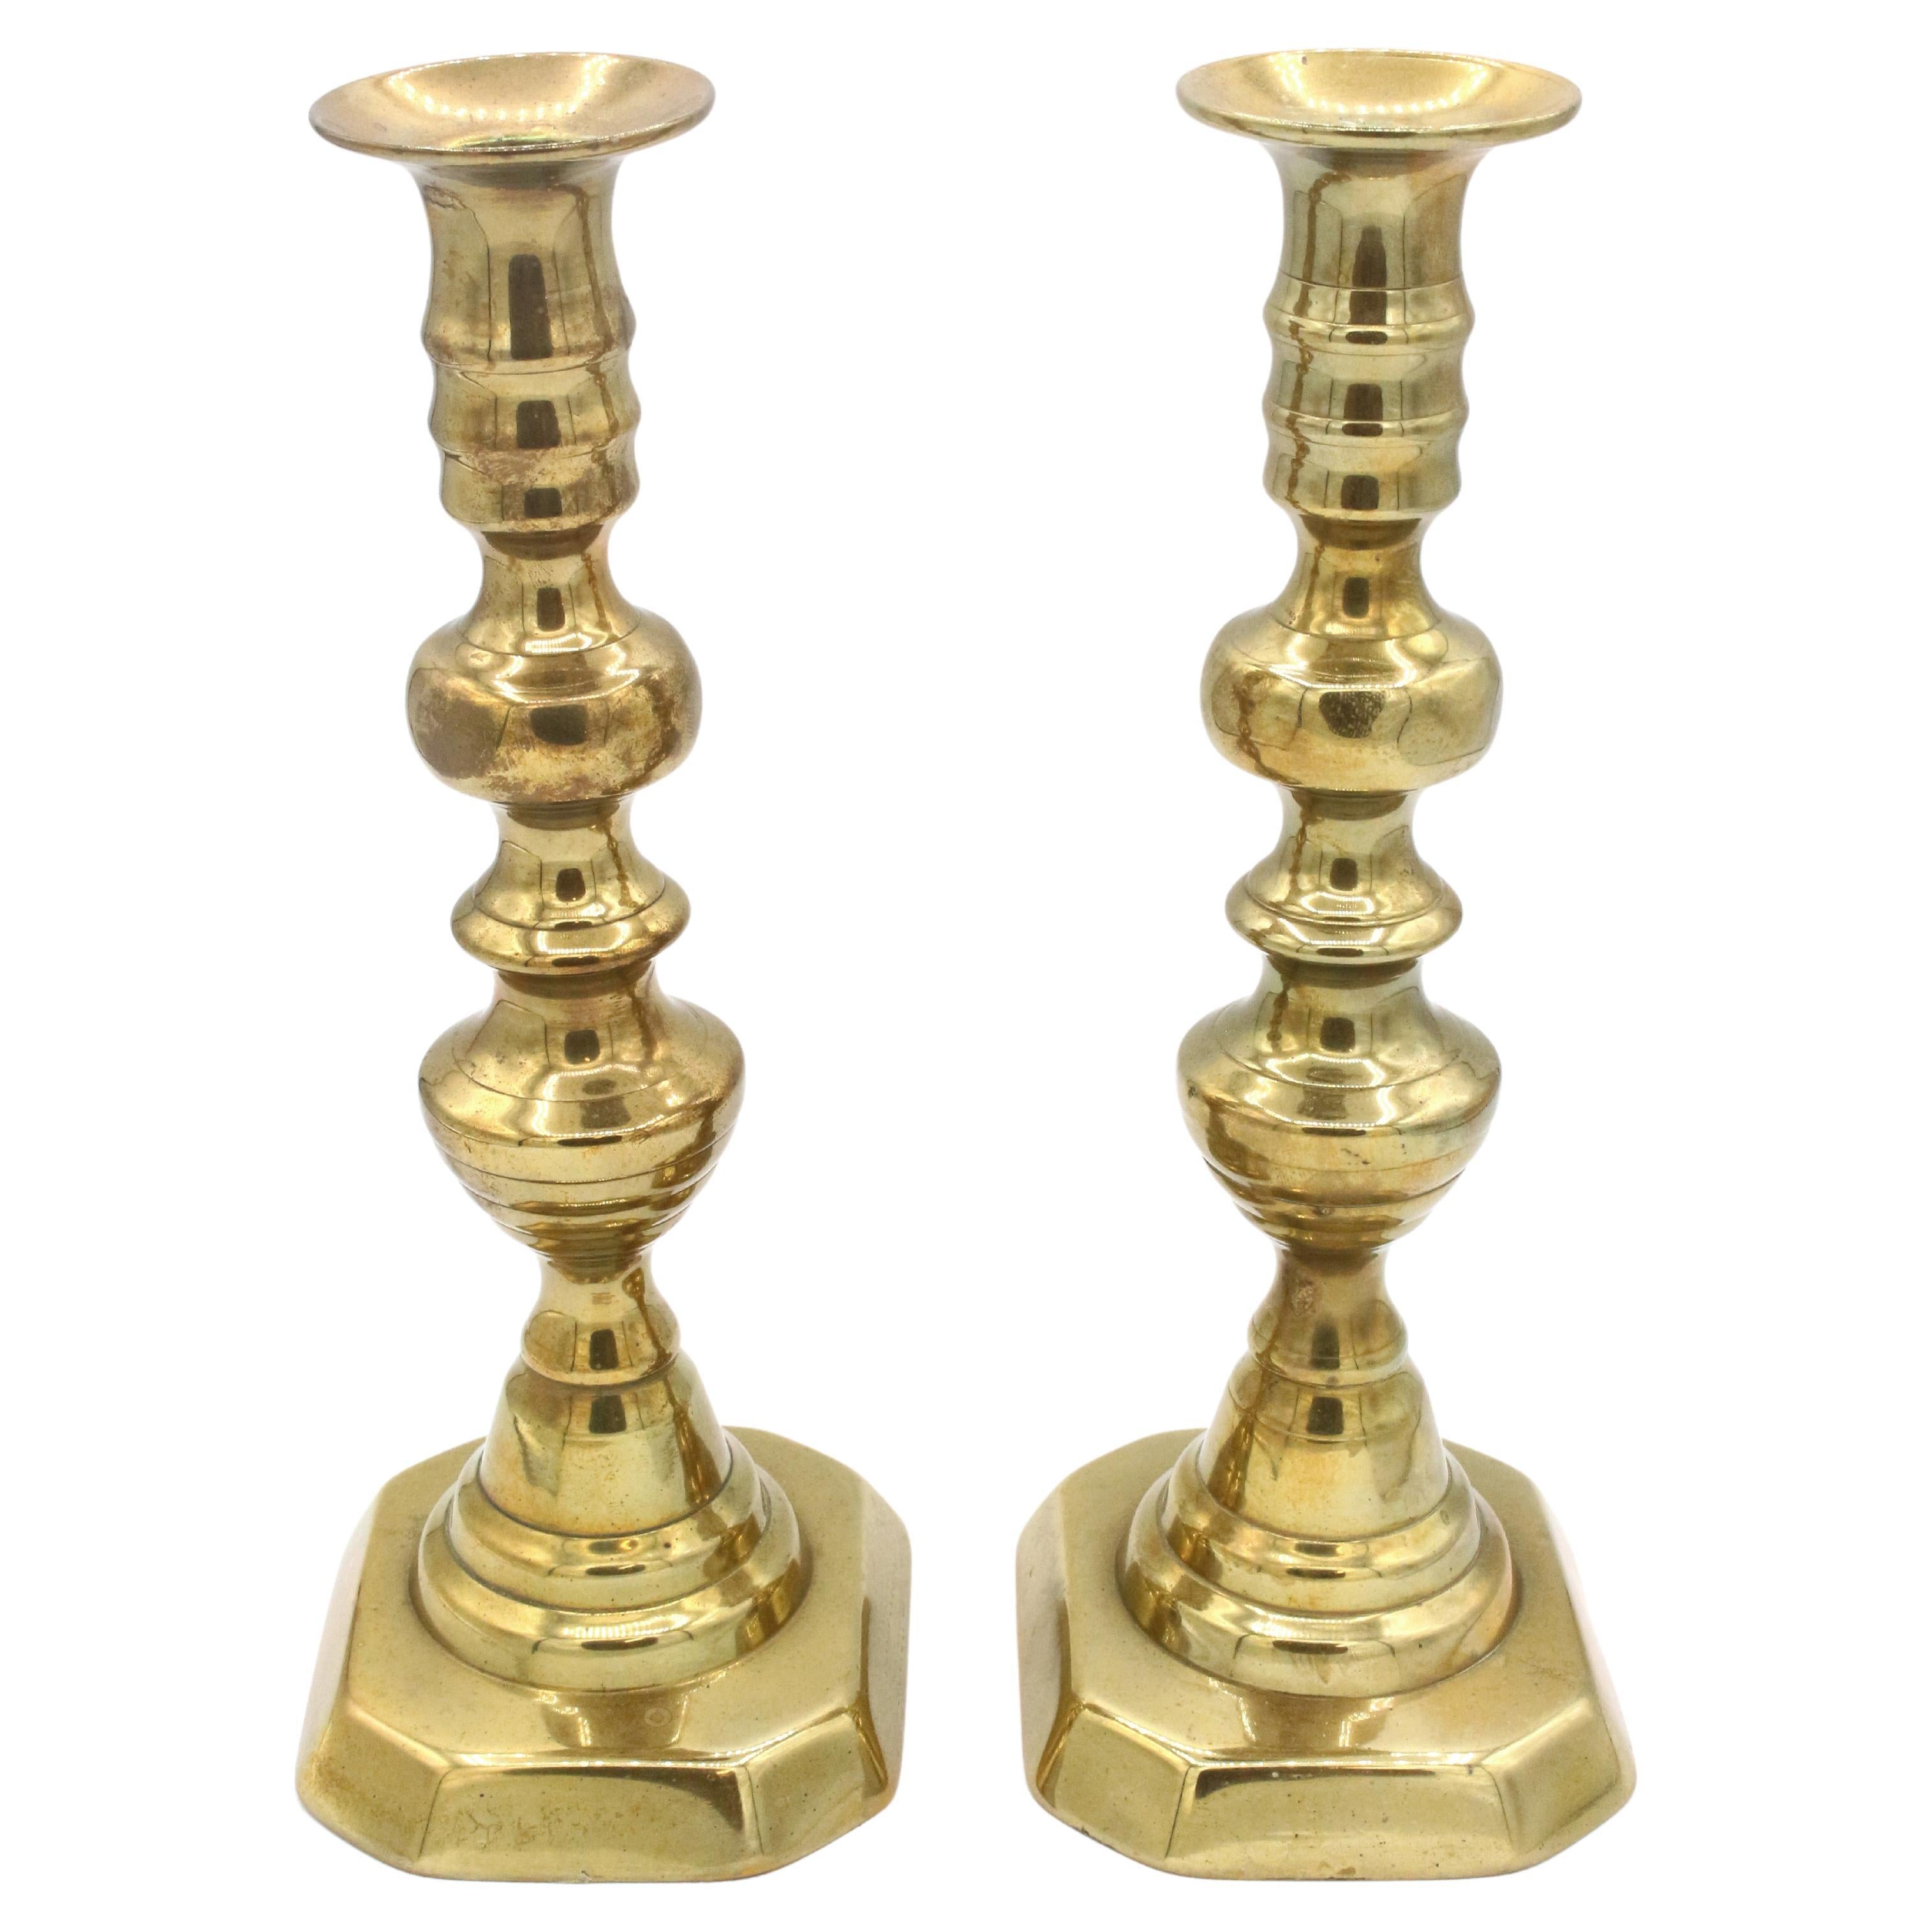 Pair of English Beehive Design Brass Candlesticks, circa 1860s